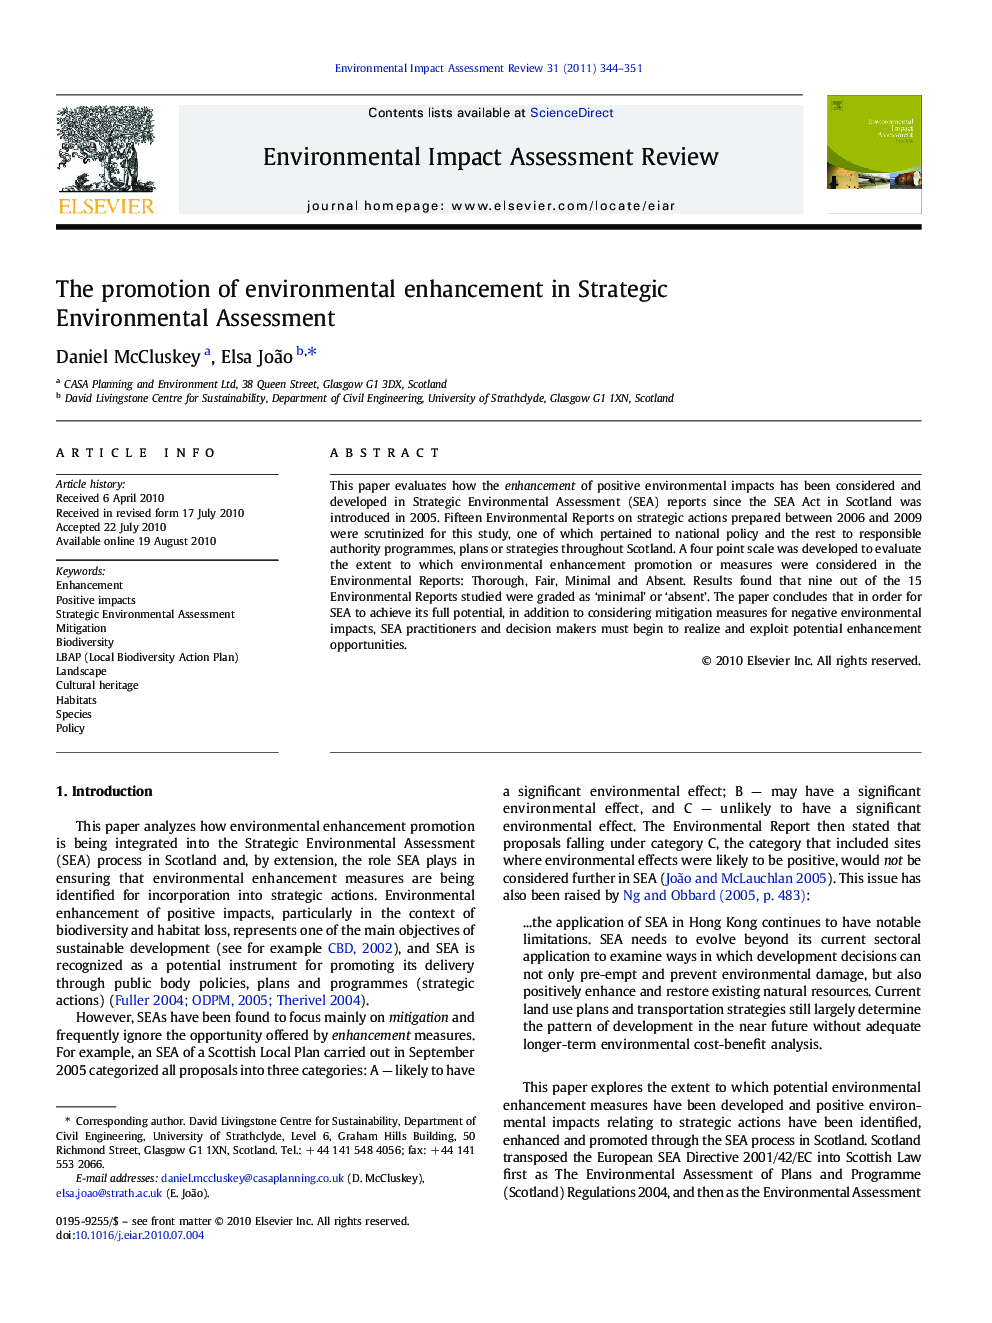 The promotion of environmental enhancement in Strategic Environmental Assessment